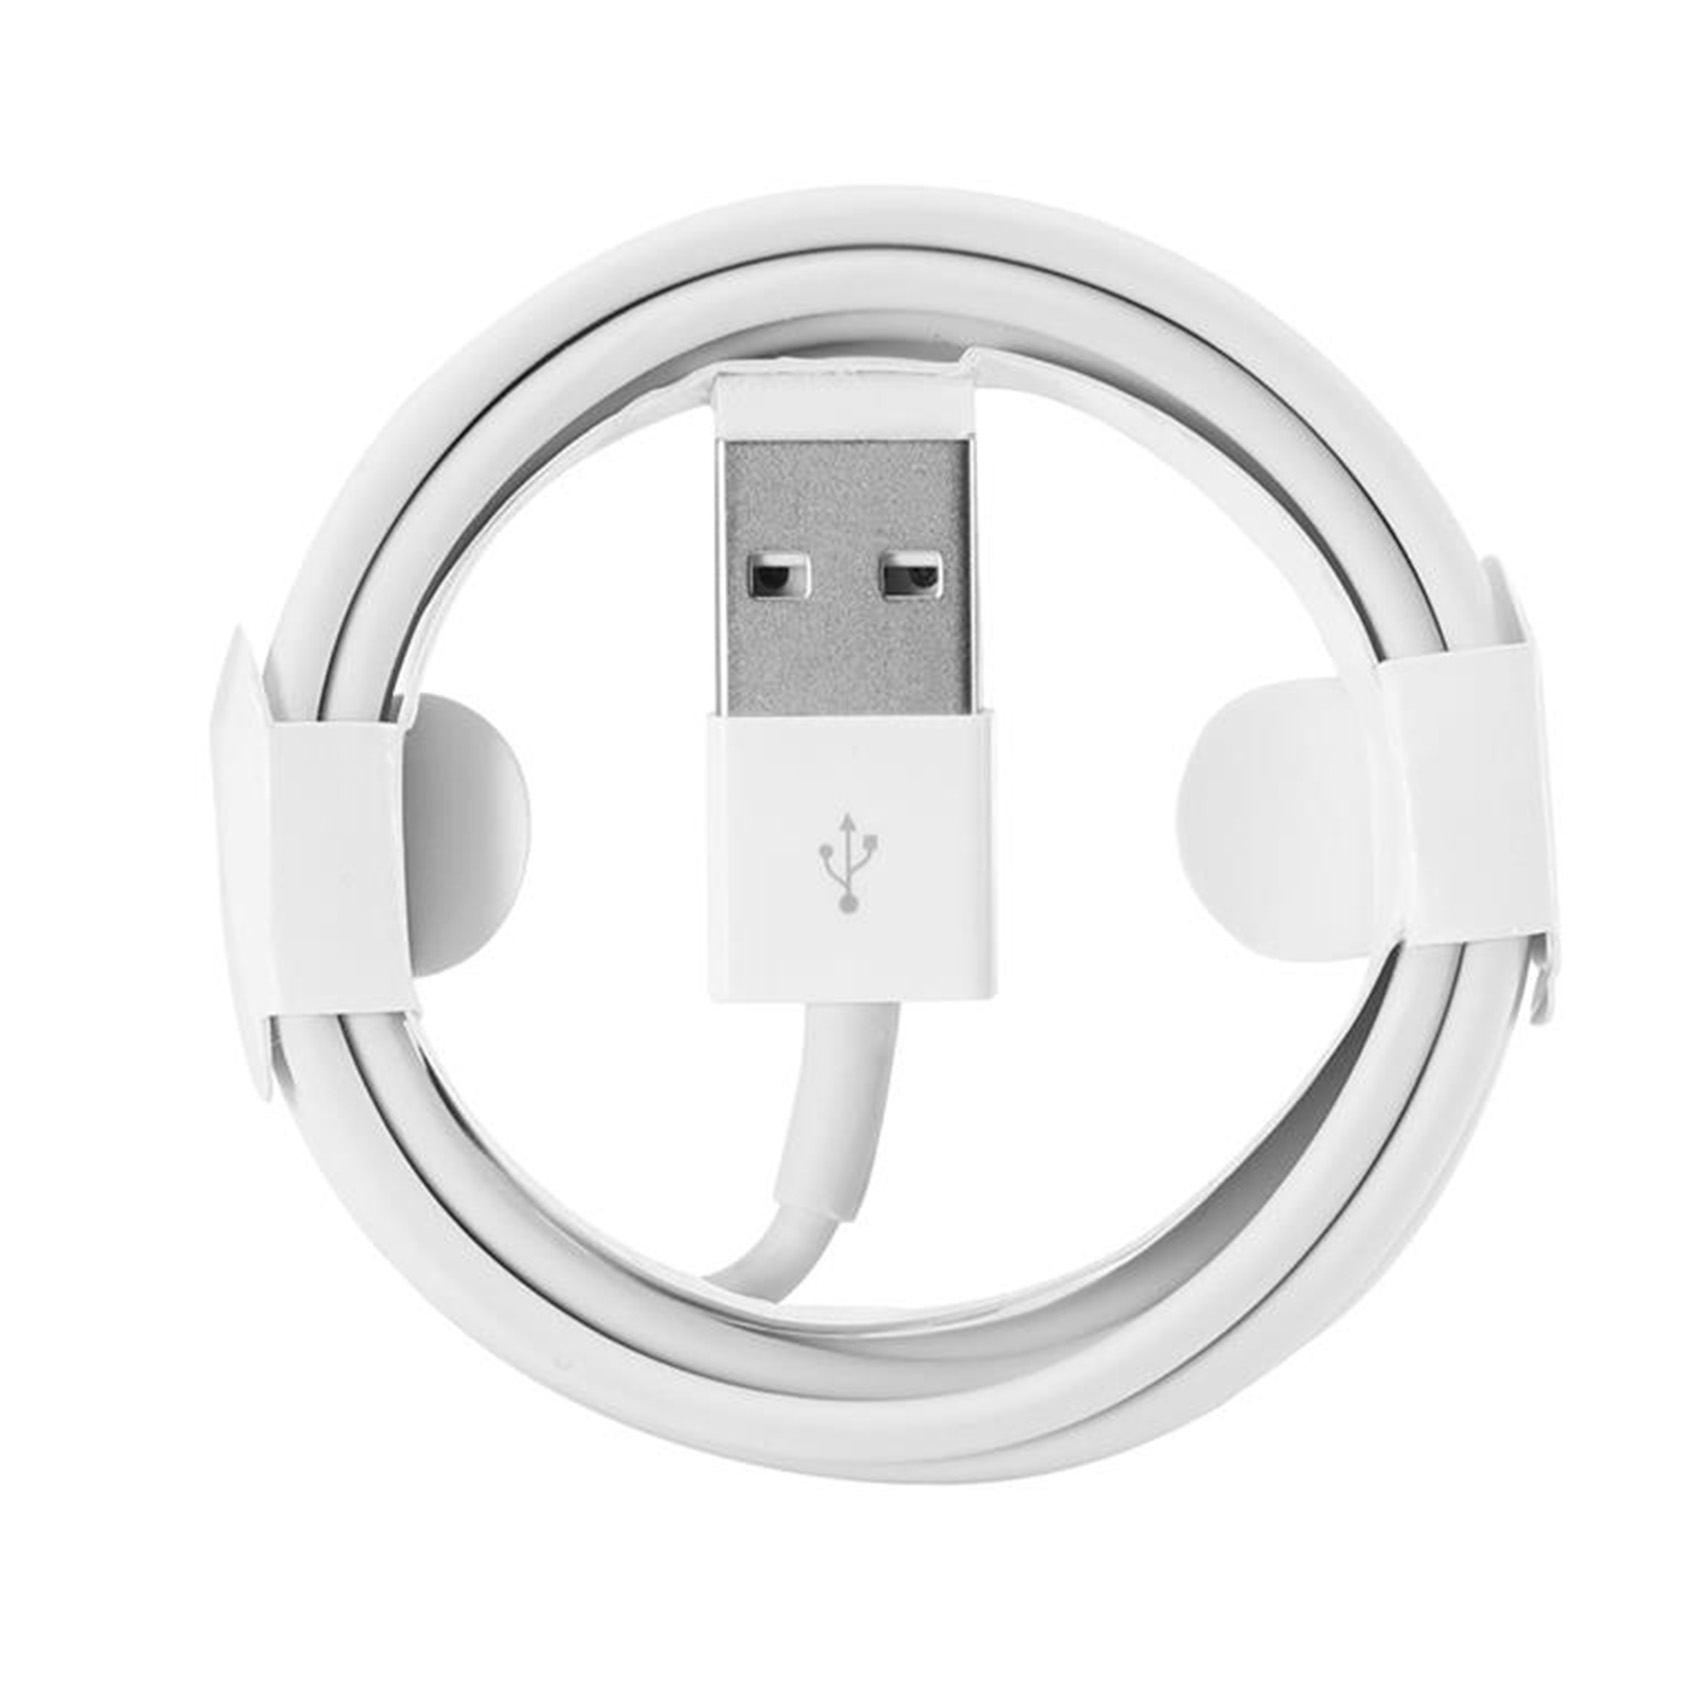 iPhone 6s Plus Lightning auf USB Kabel 1m Ladekabel